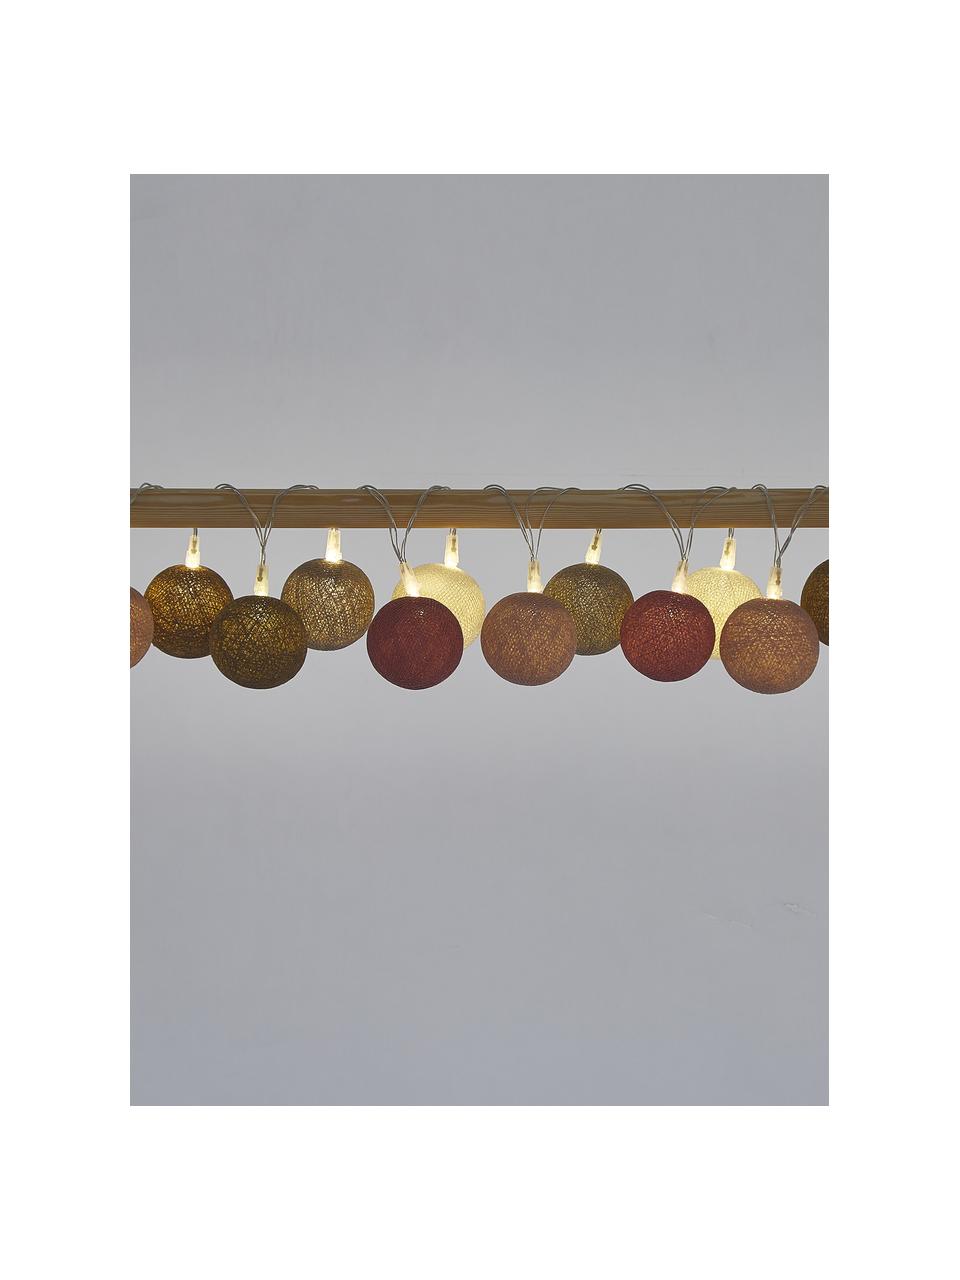 Ghirlanda a LED Colorain, 378 cm, Lanterne: poliestere, certificata W, Beige, tonalità marroni, tonalità rosa, Lung. 378 cm, 20 lanterne